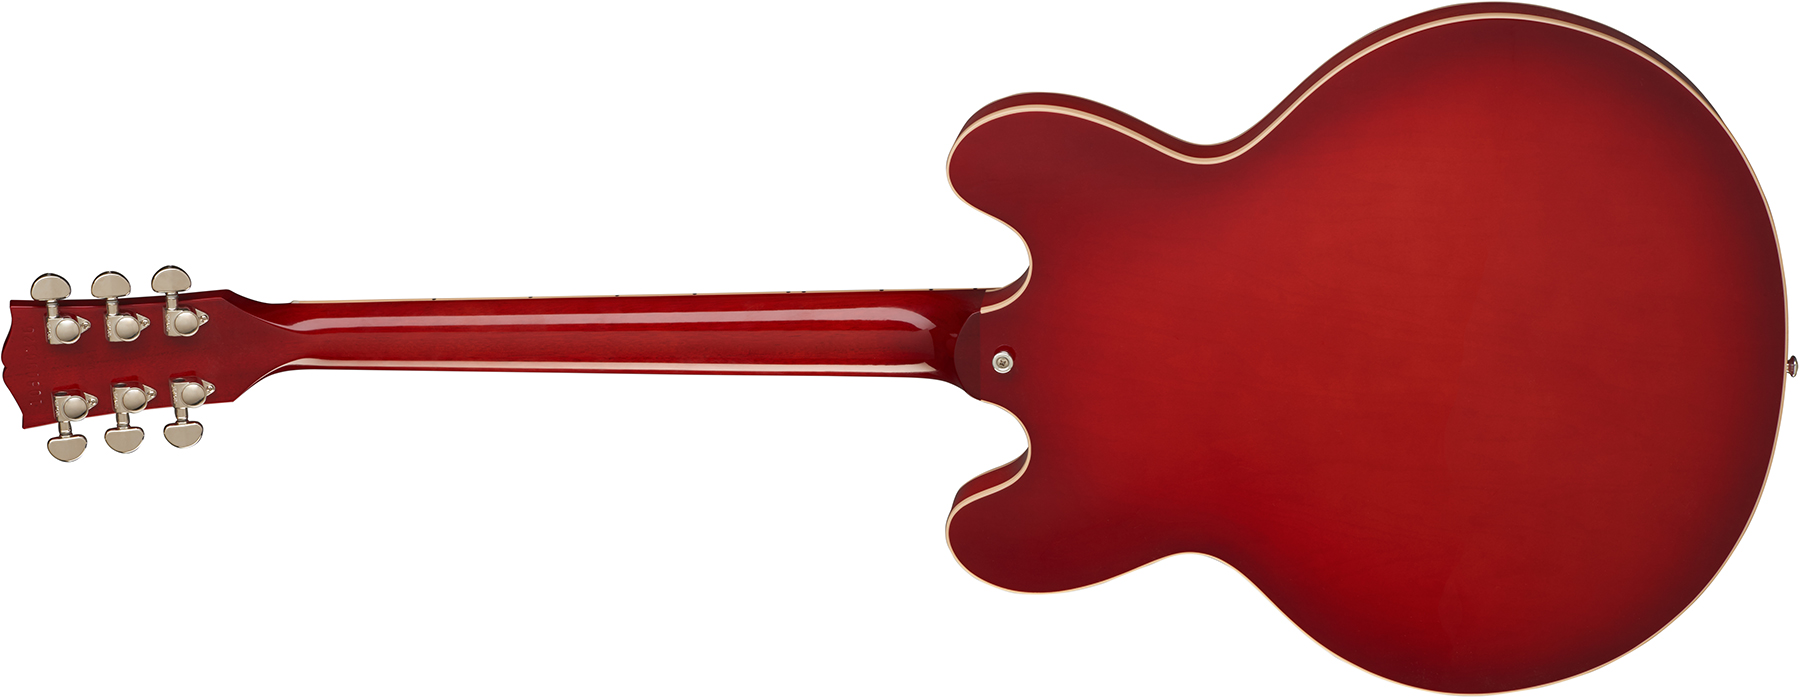 Gibson Es-335 Dot 2019 Hh Ht Rw - Cherry Burst - Semi-hollow electric guitar - Variation 1